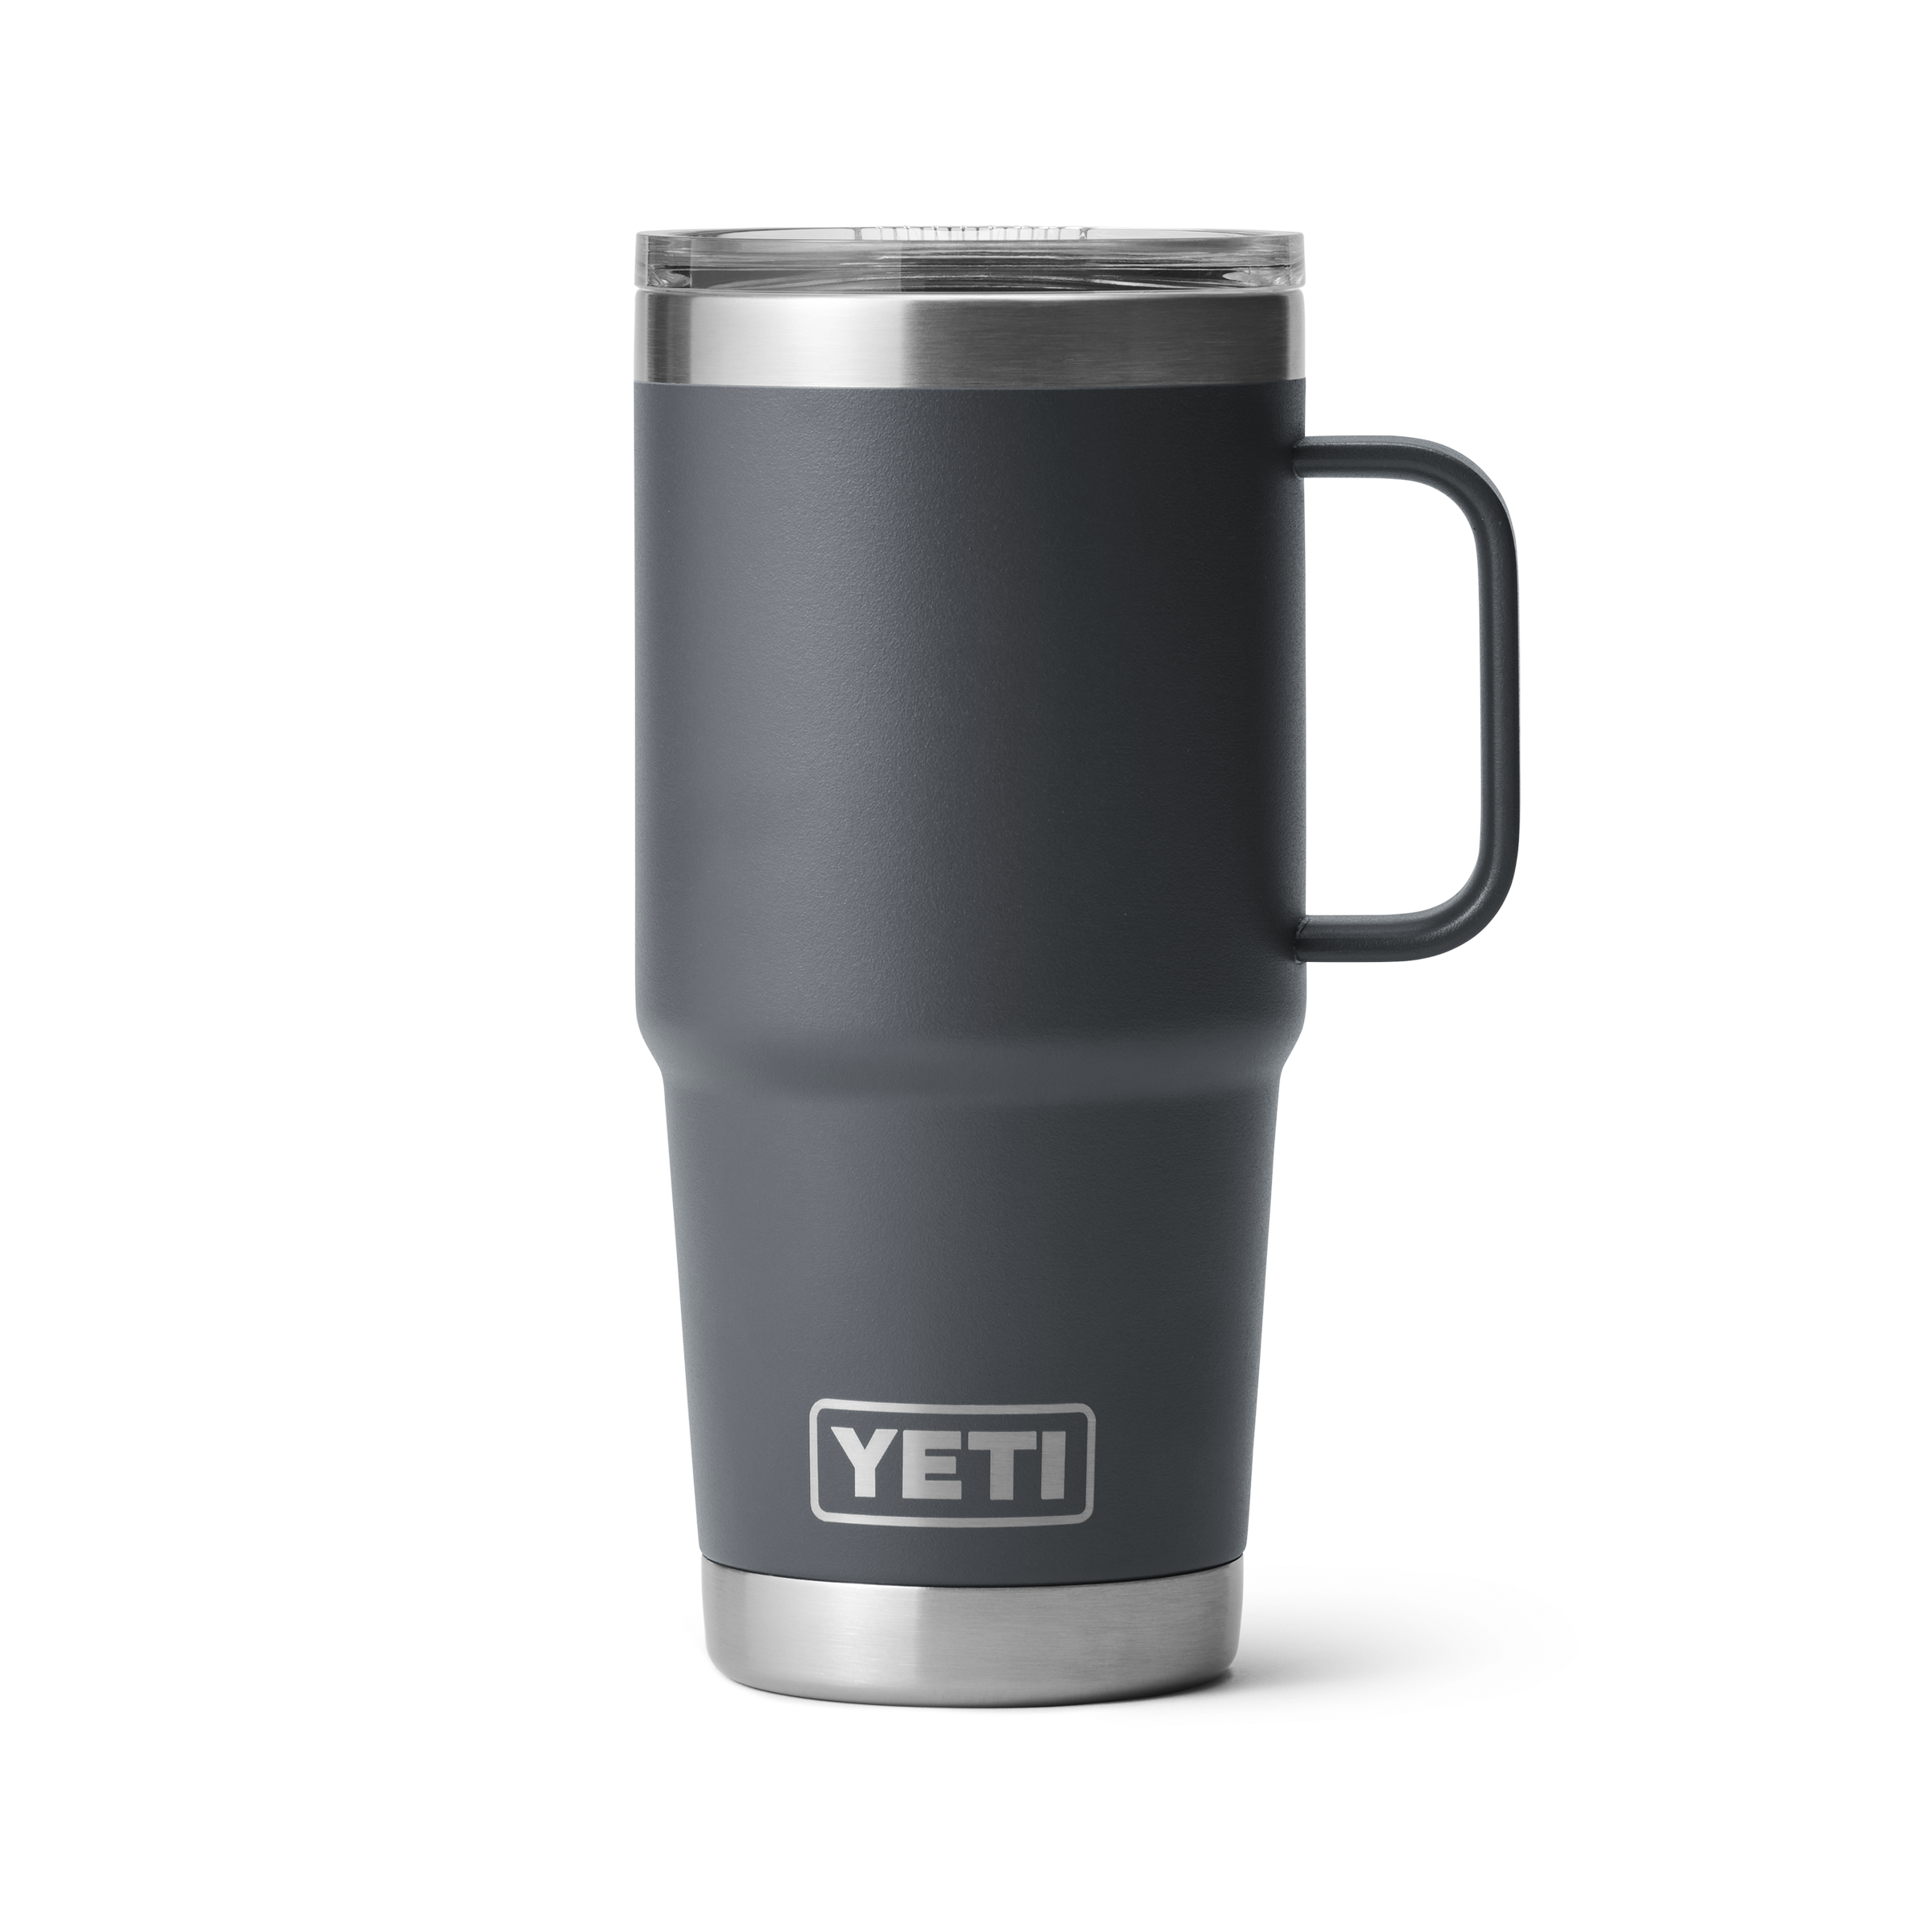 Reusable 20 oz Yeti Tumbler  Traditional Yet Mug With Engraving